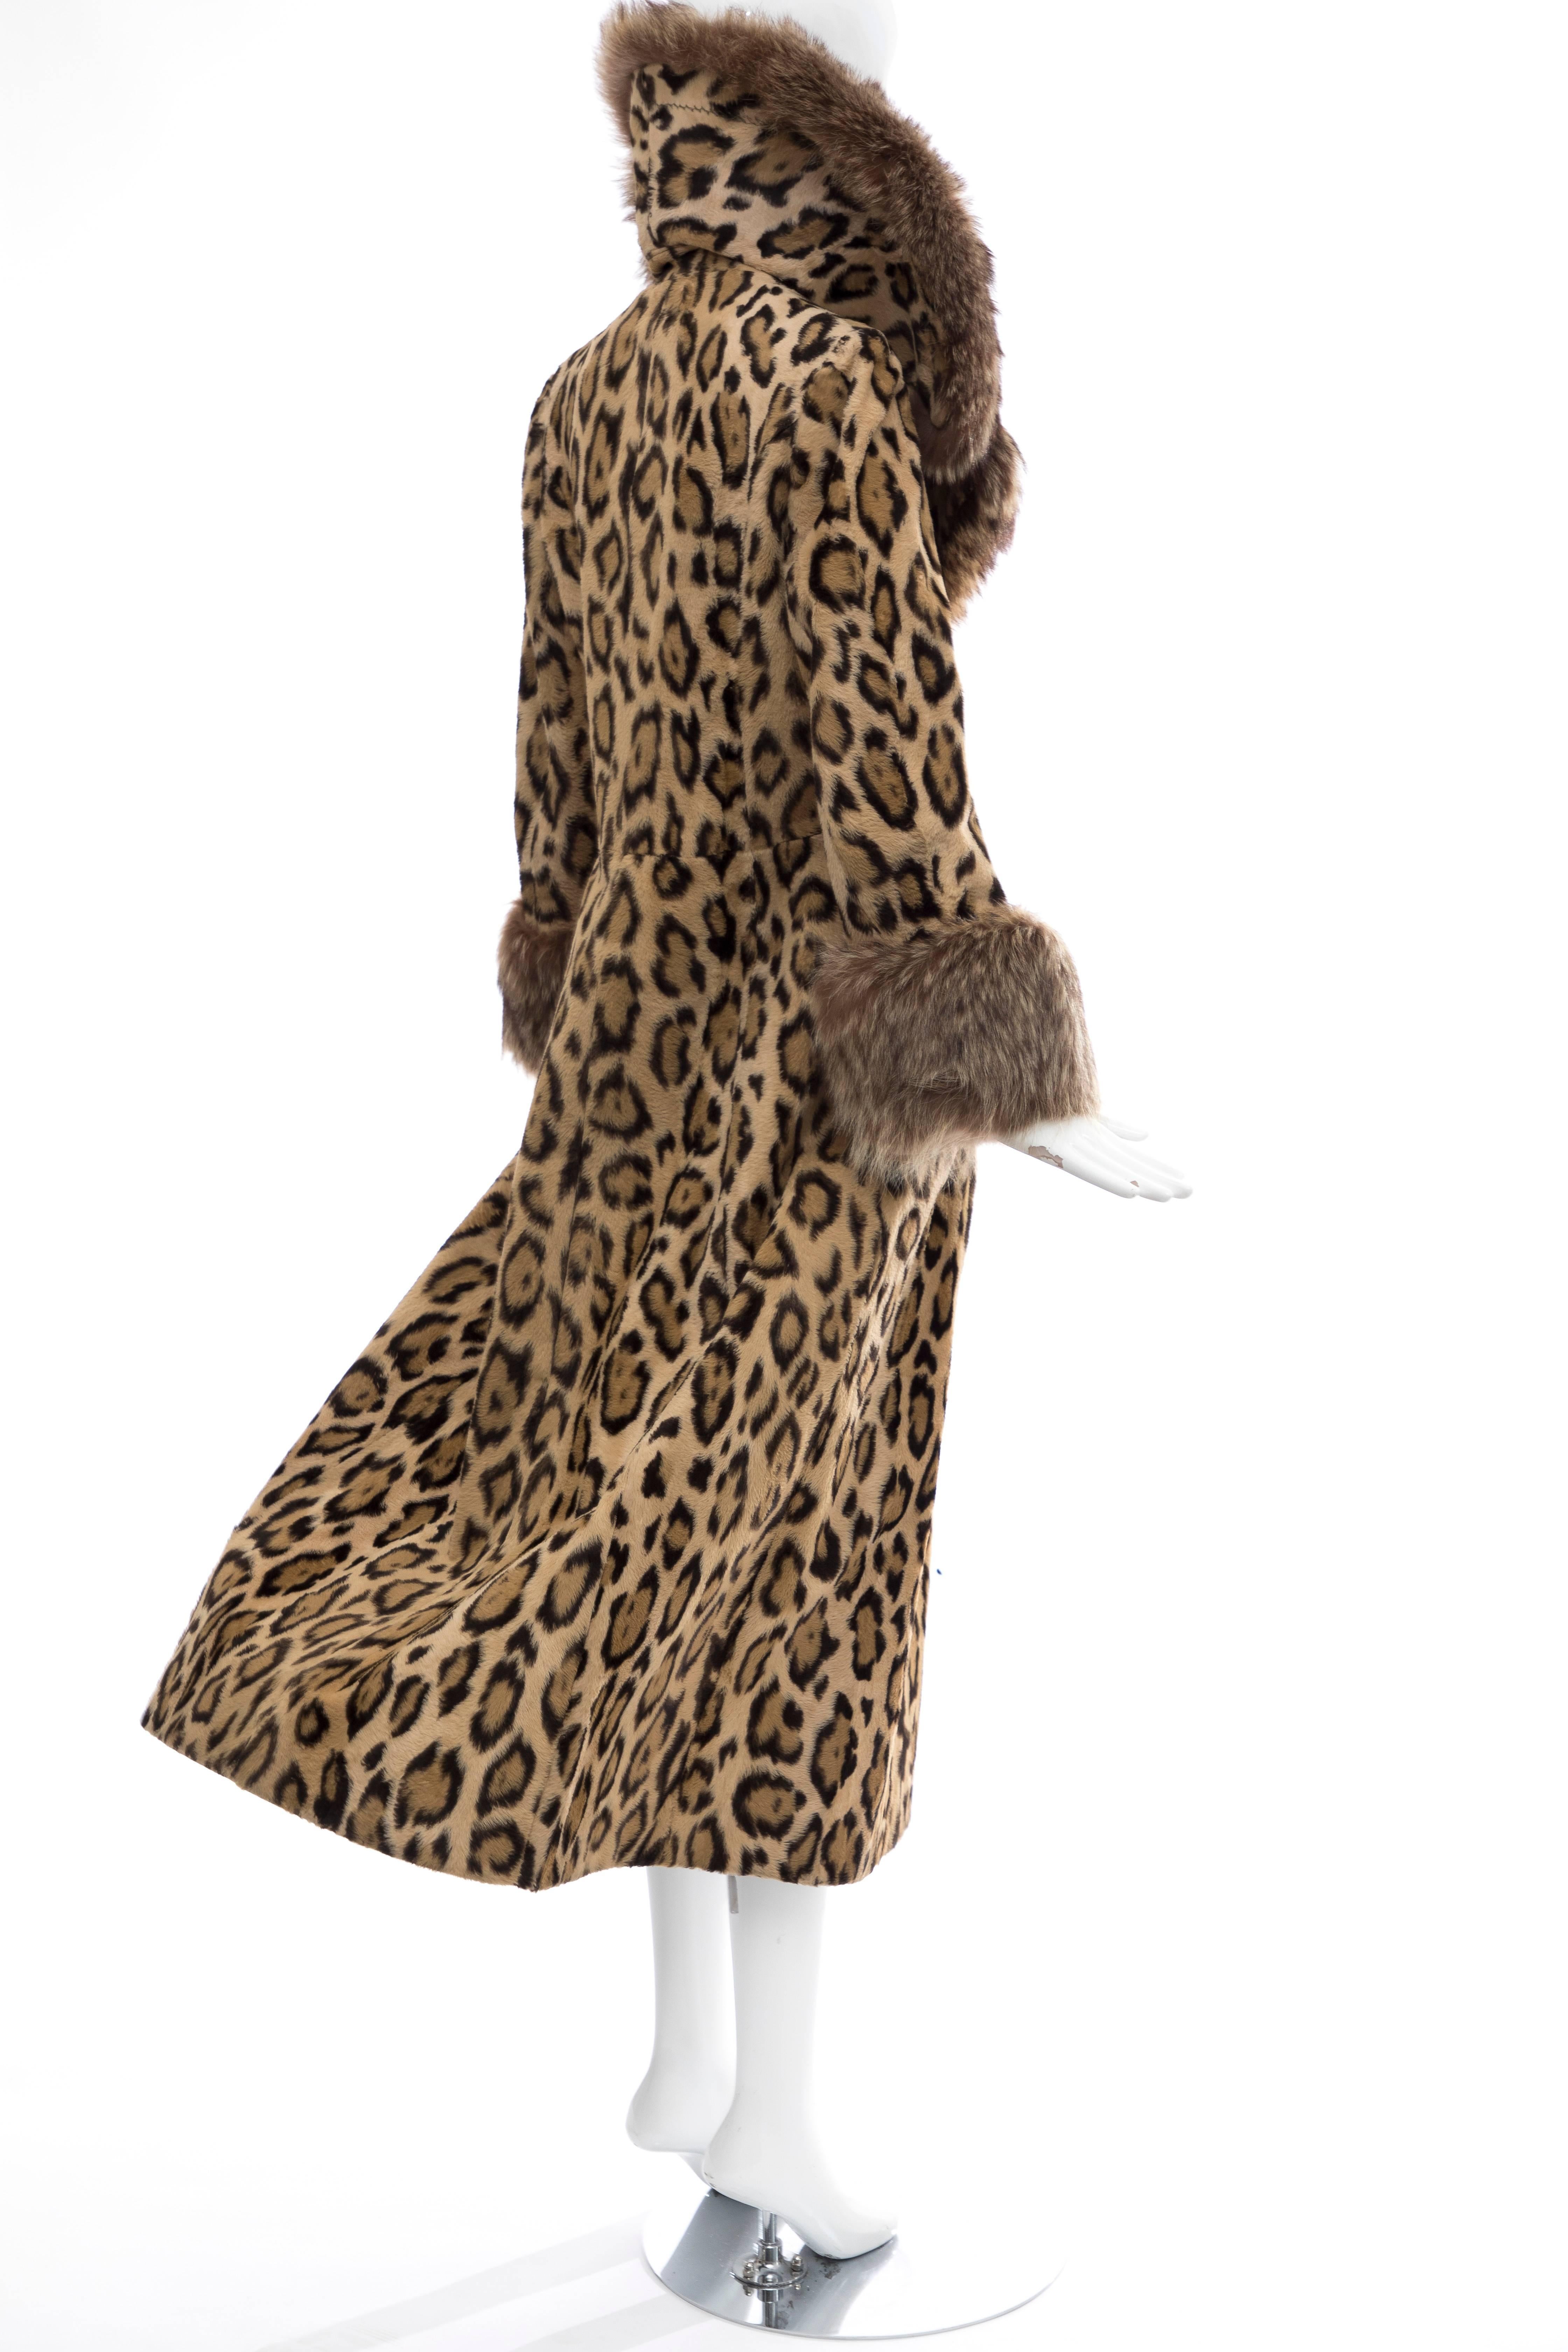 Goldring's Couture Faux Leopard Coat Dramatic Fur Collar & Cuffs, Circa: 1970's 2